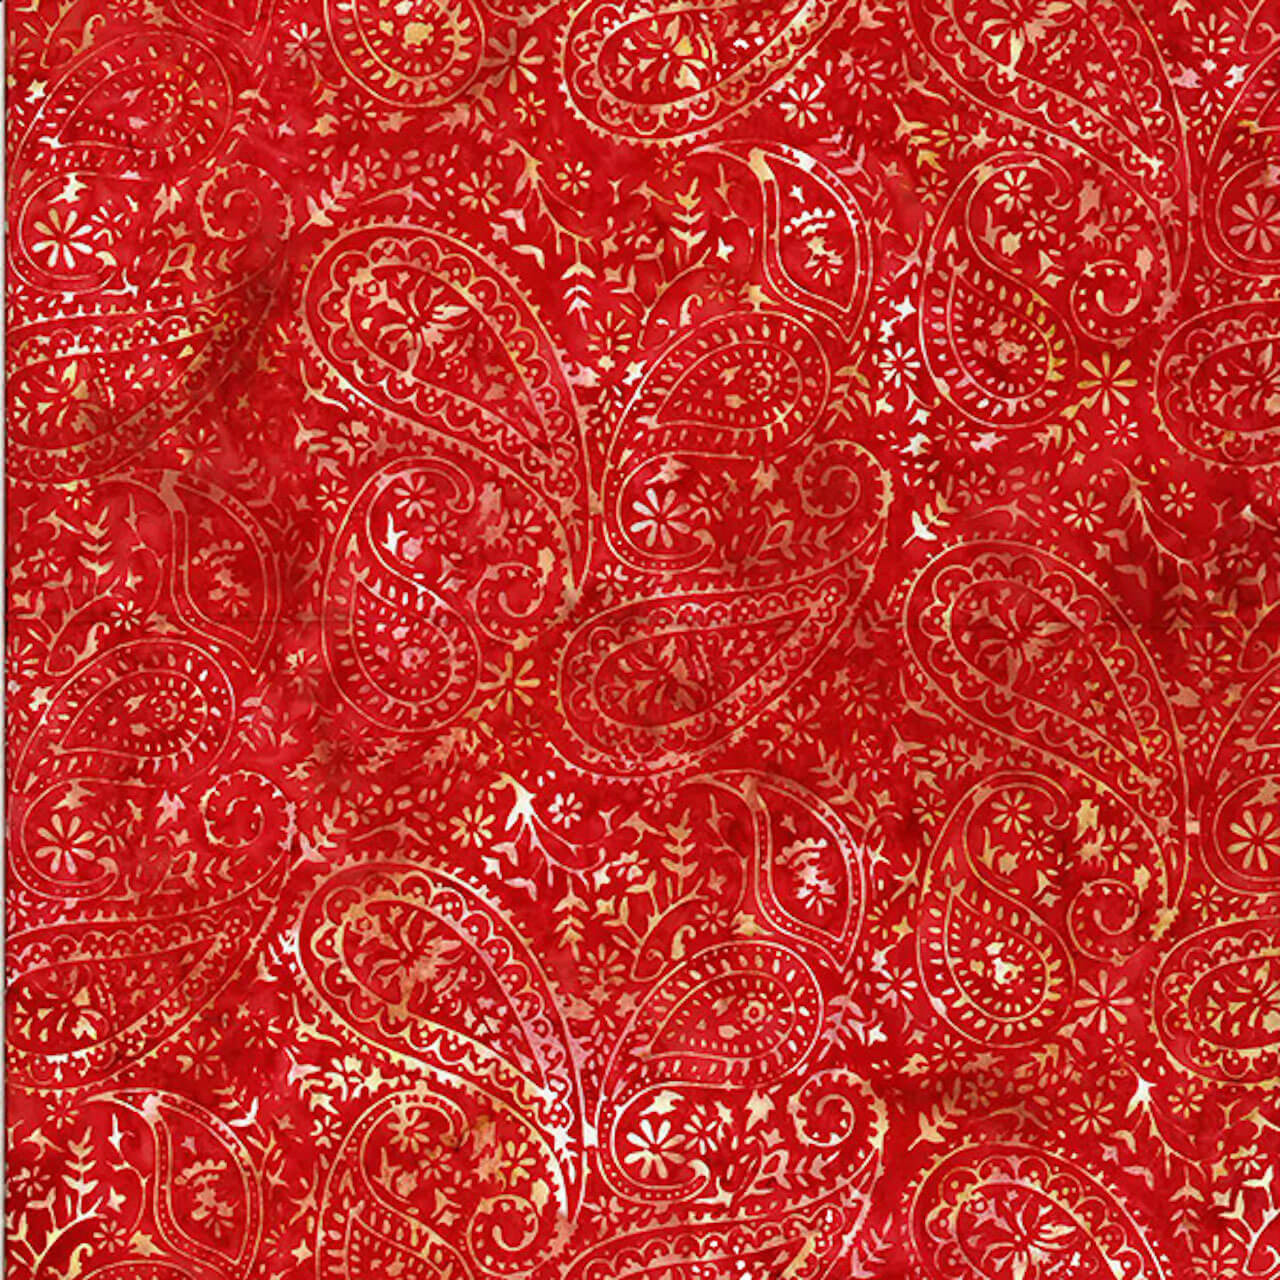 Vibrant red Chili Paisley batik fabric from Hoffman Fabrics' Bali Handpaints Batiks collection, featuring intricate paisley patterns.